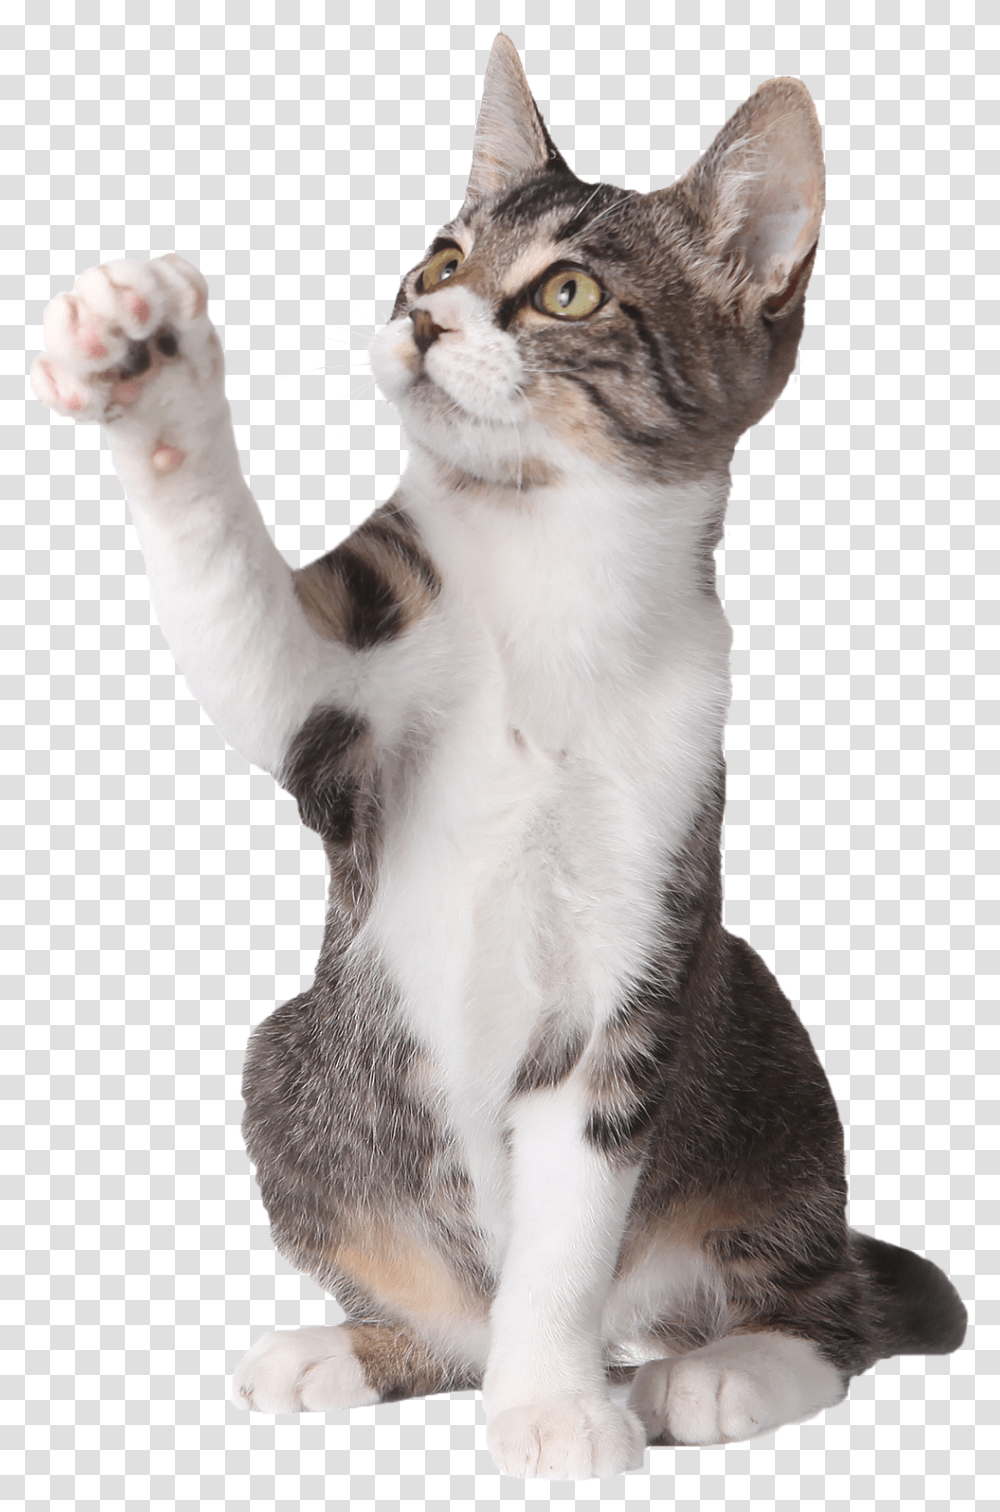 Cat Pointing Up Cat Paw Up, Pet, Mammal, Animal, Kitten Transparent Png